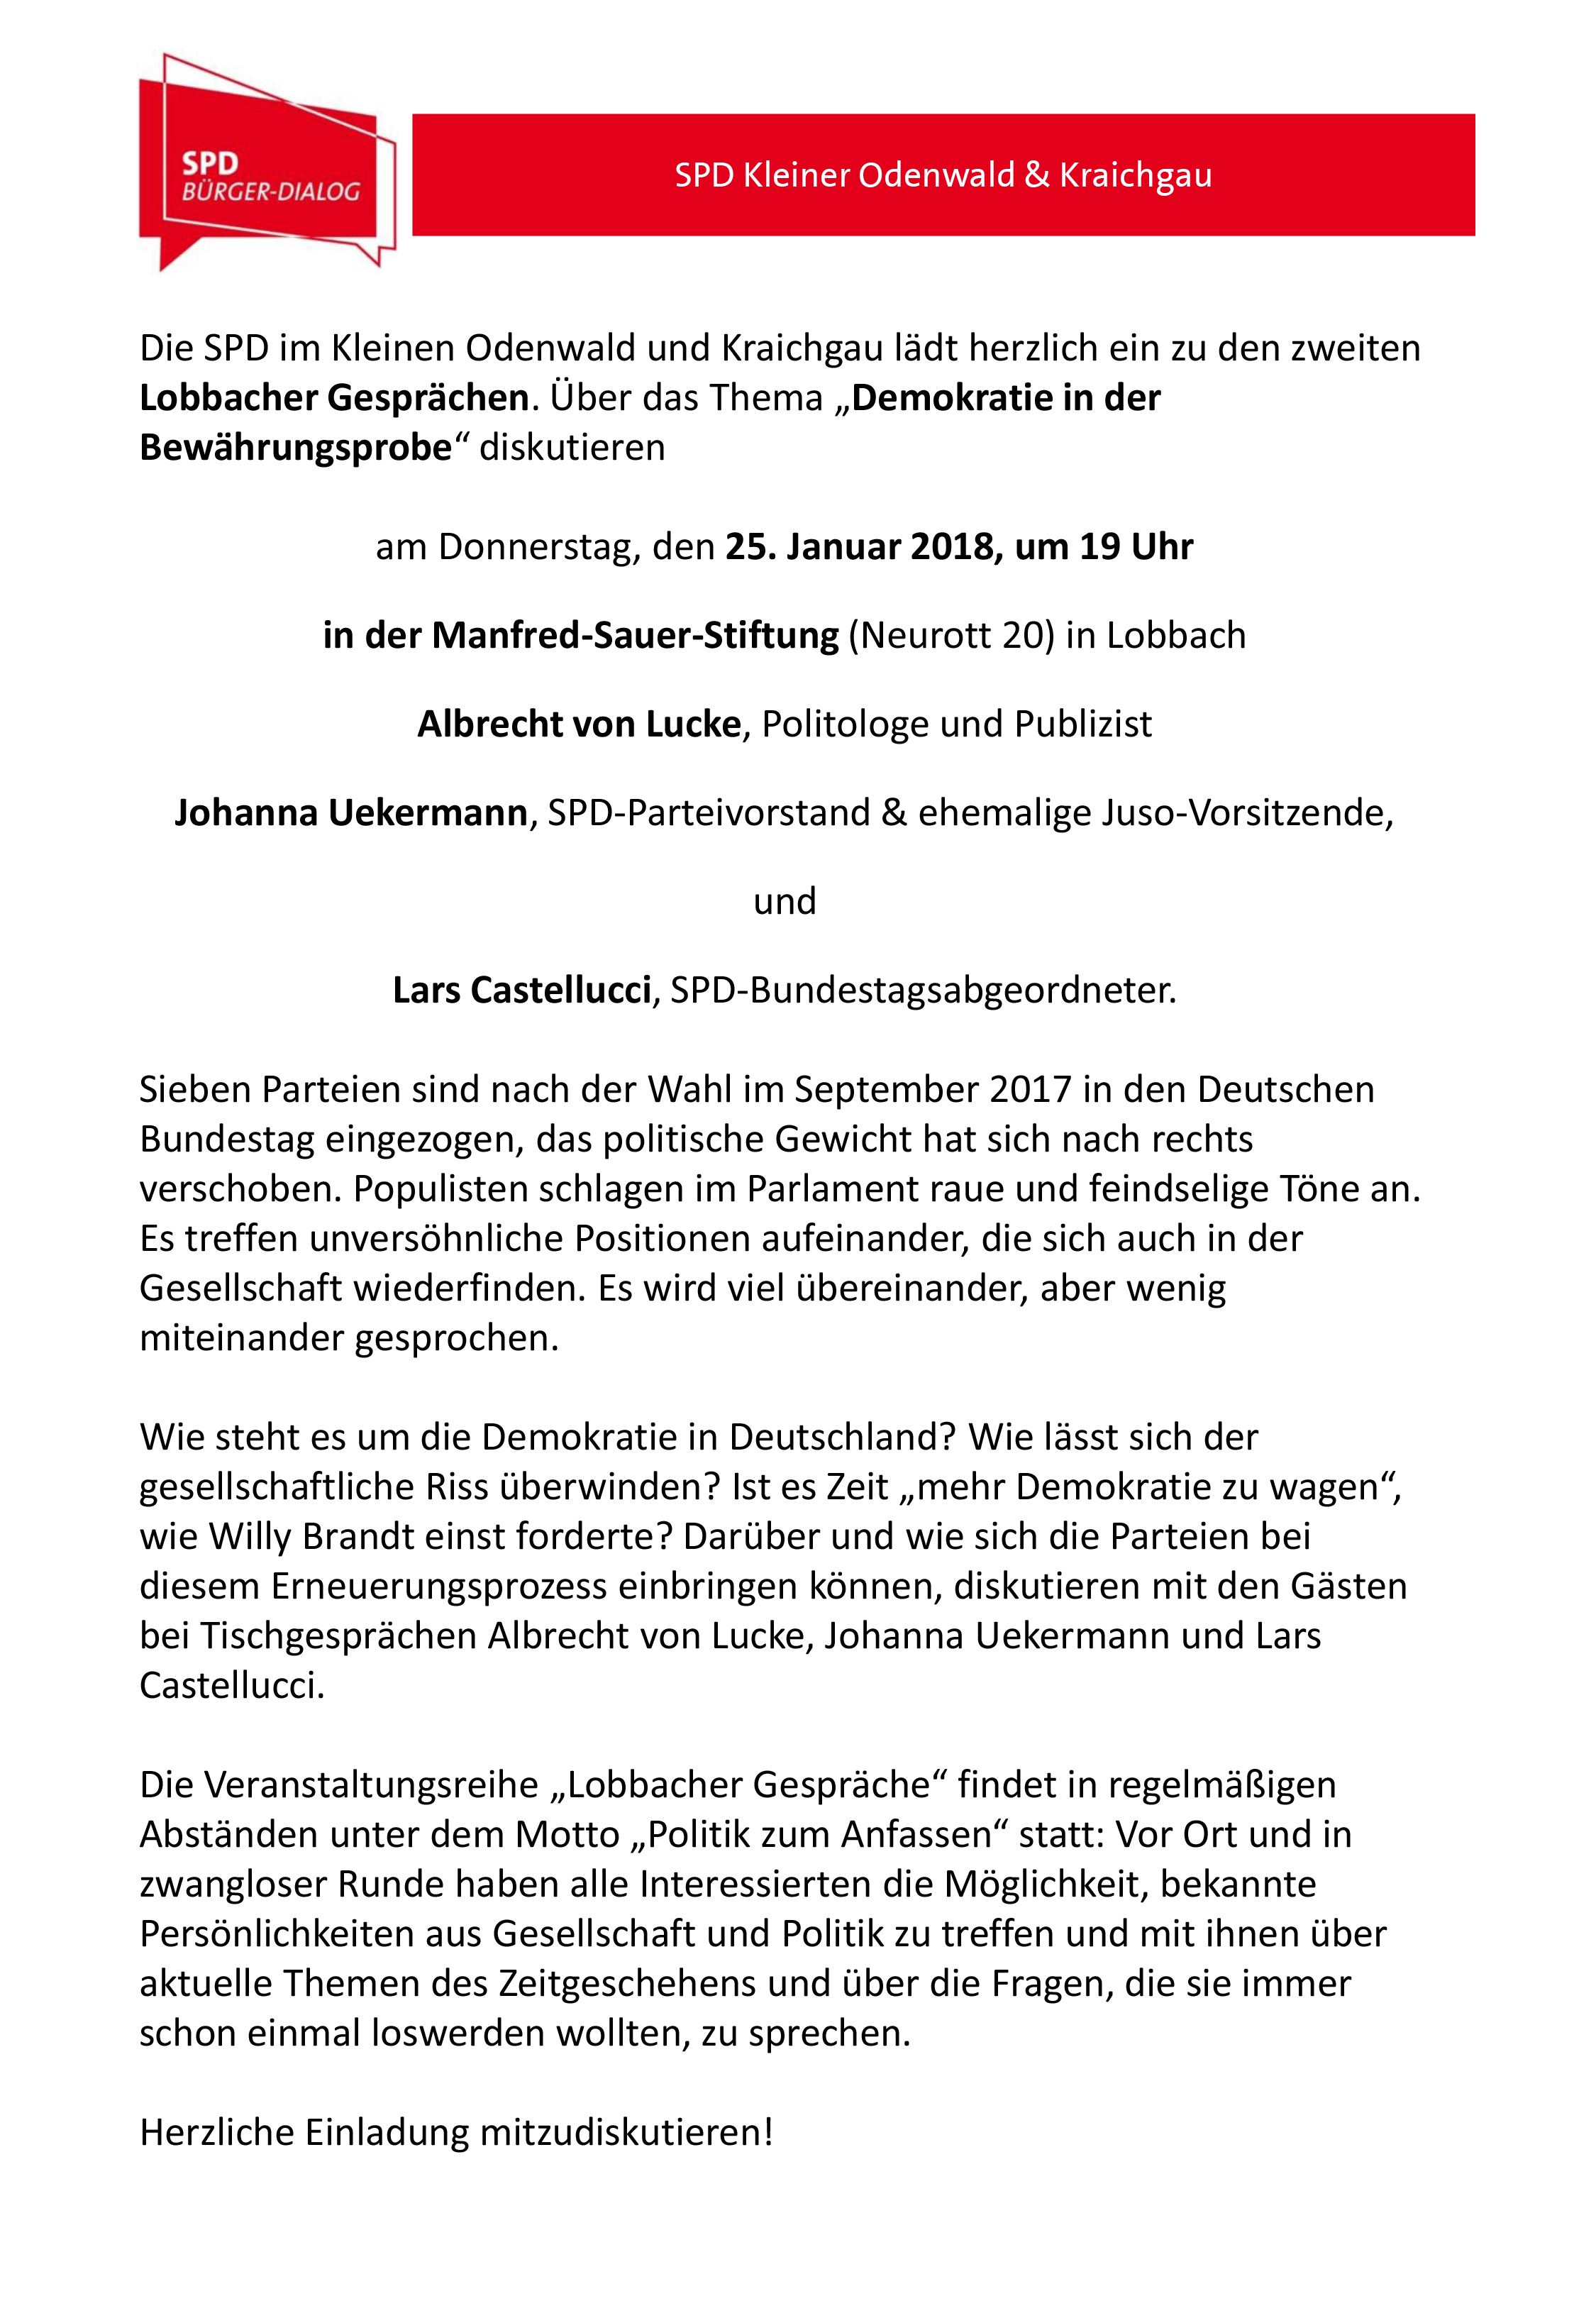 20180125 Flyer 2Lobbacher Gespräche2